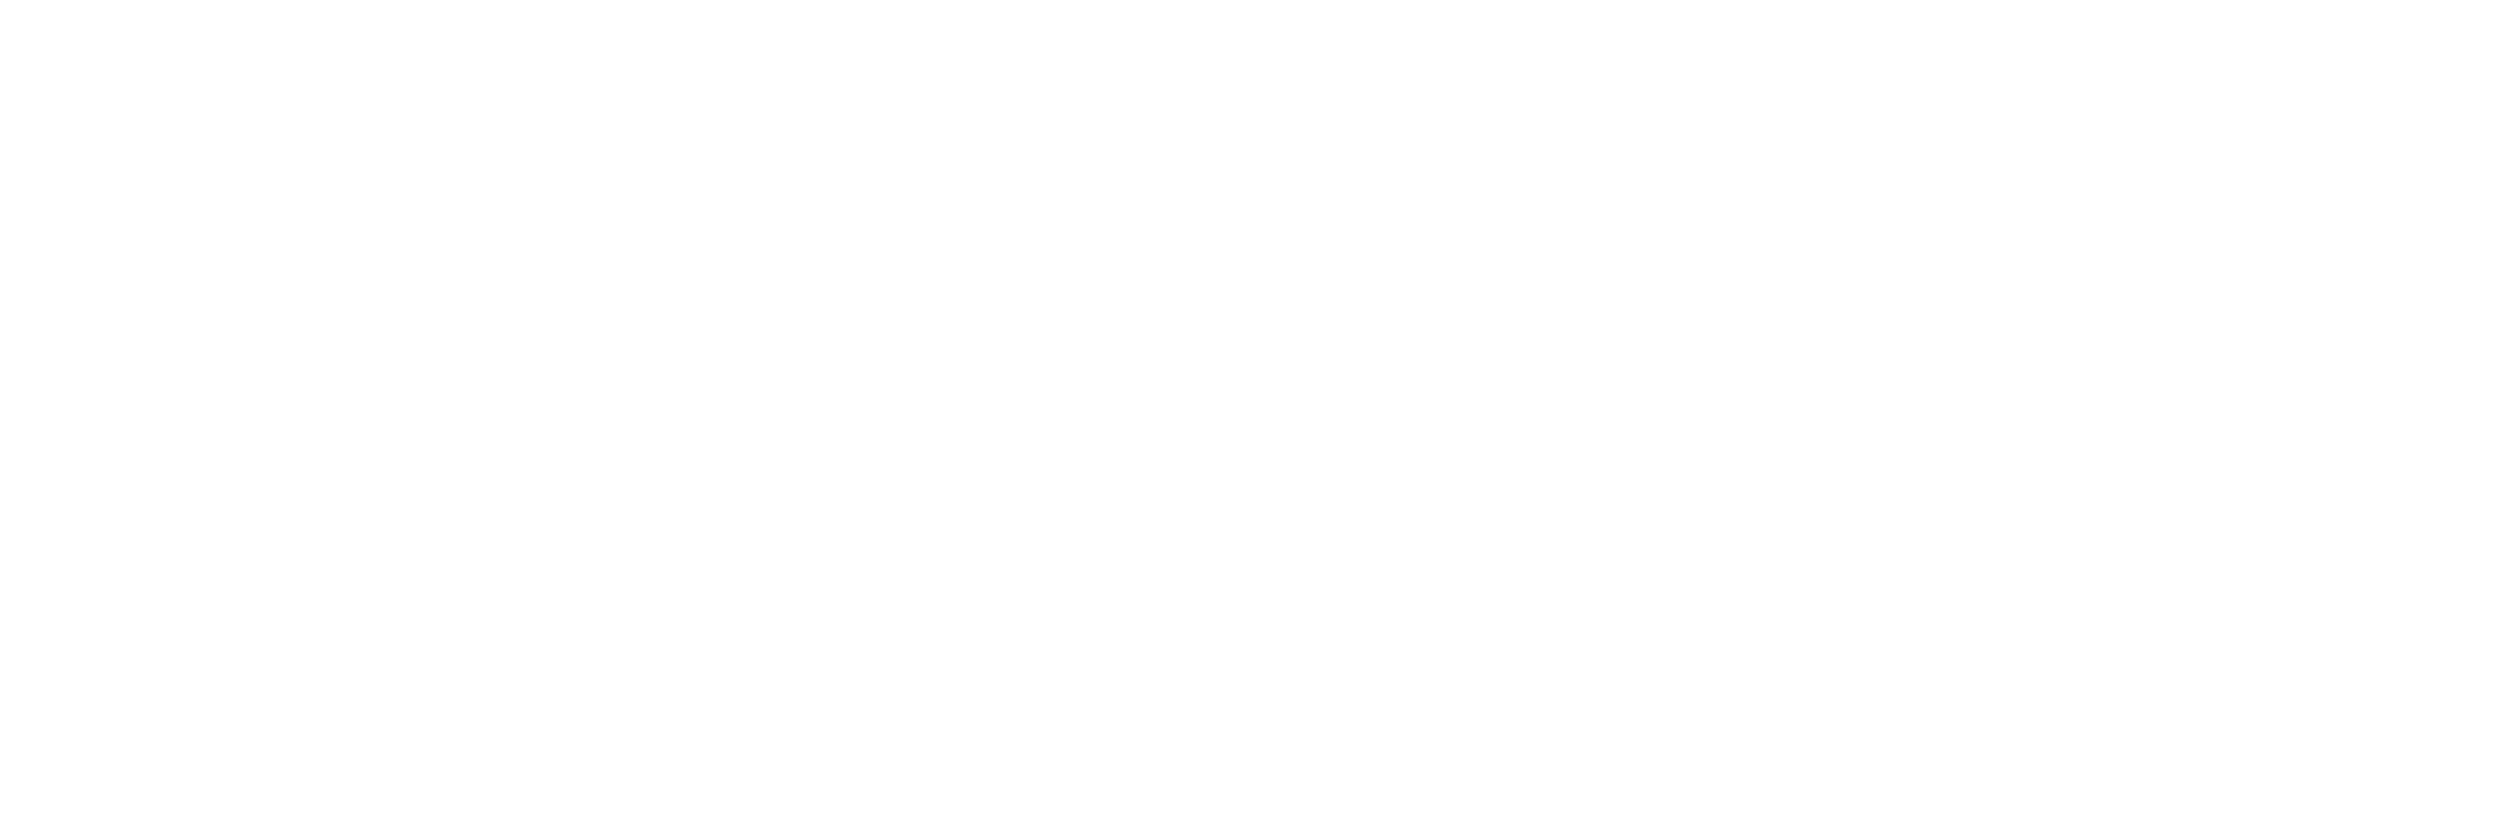 Cudlee_Creek_LogoWide.png